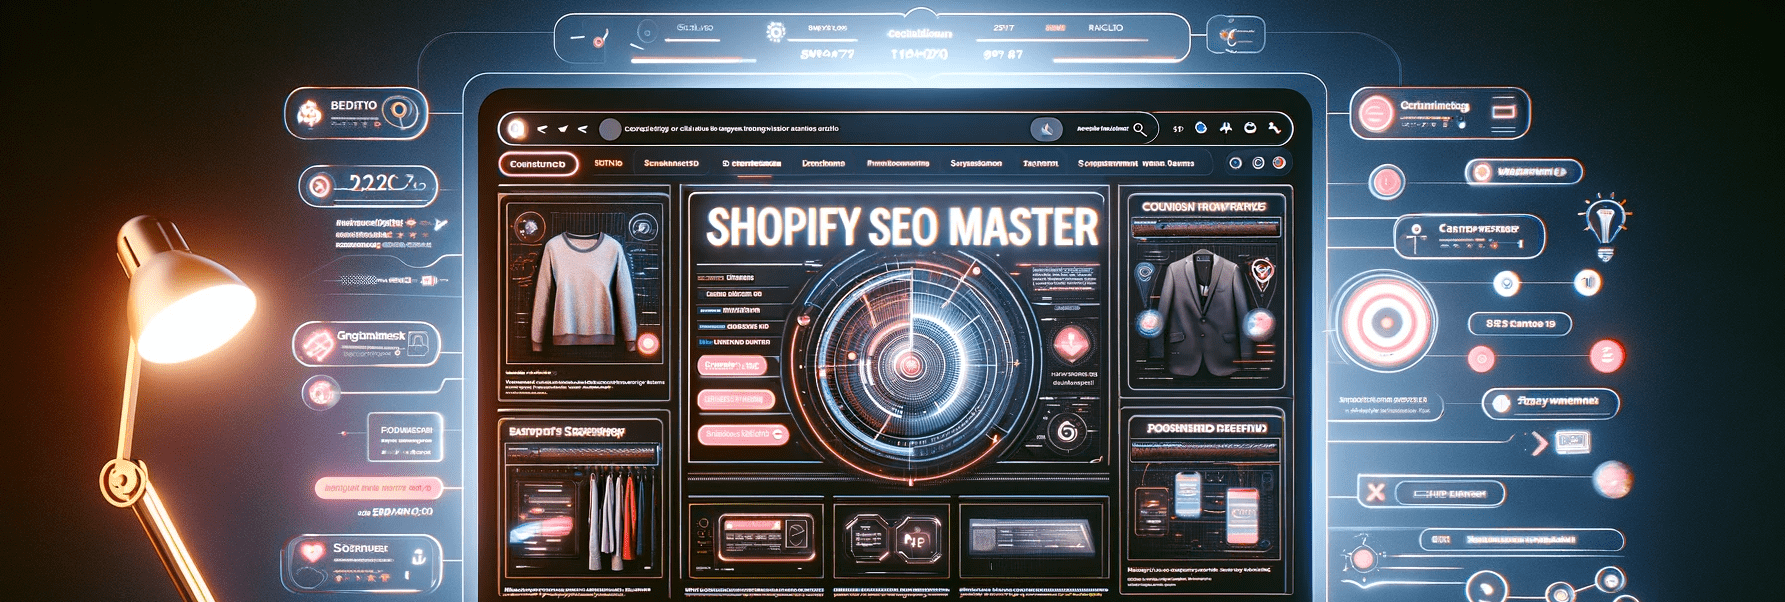 Shopify SEO Master by GPTixy